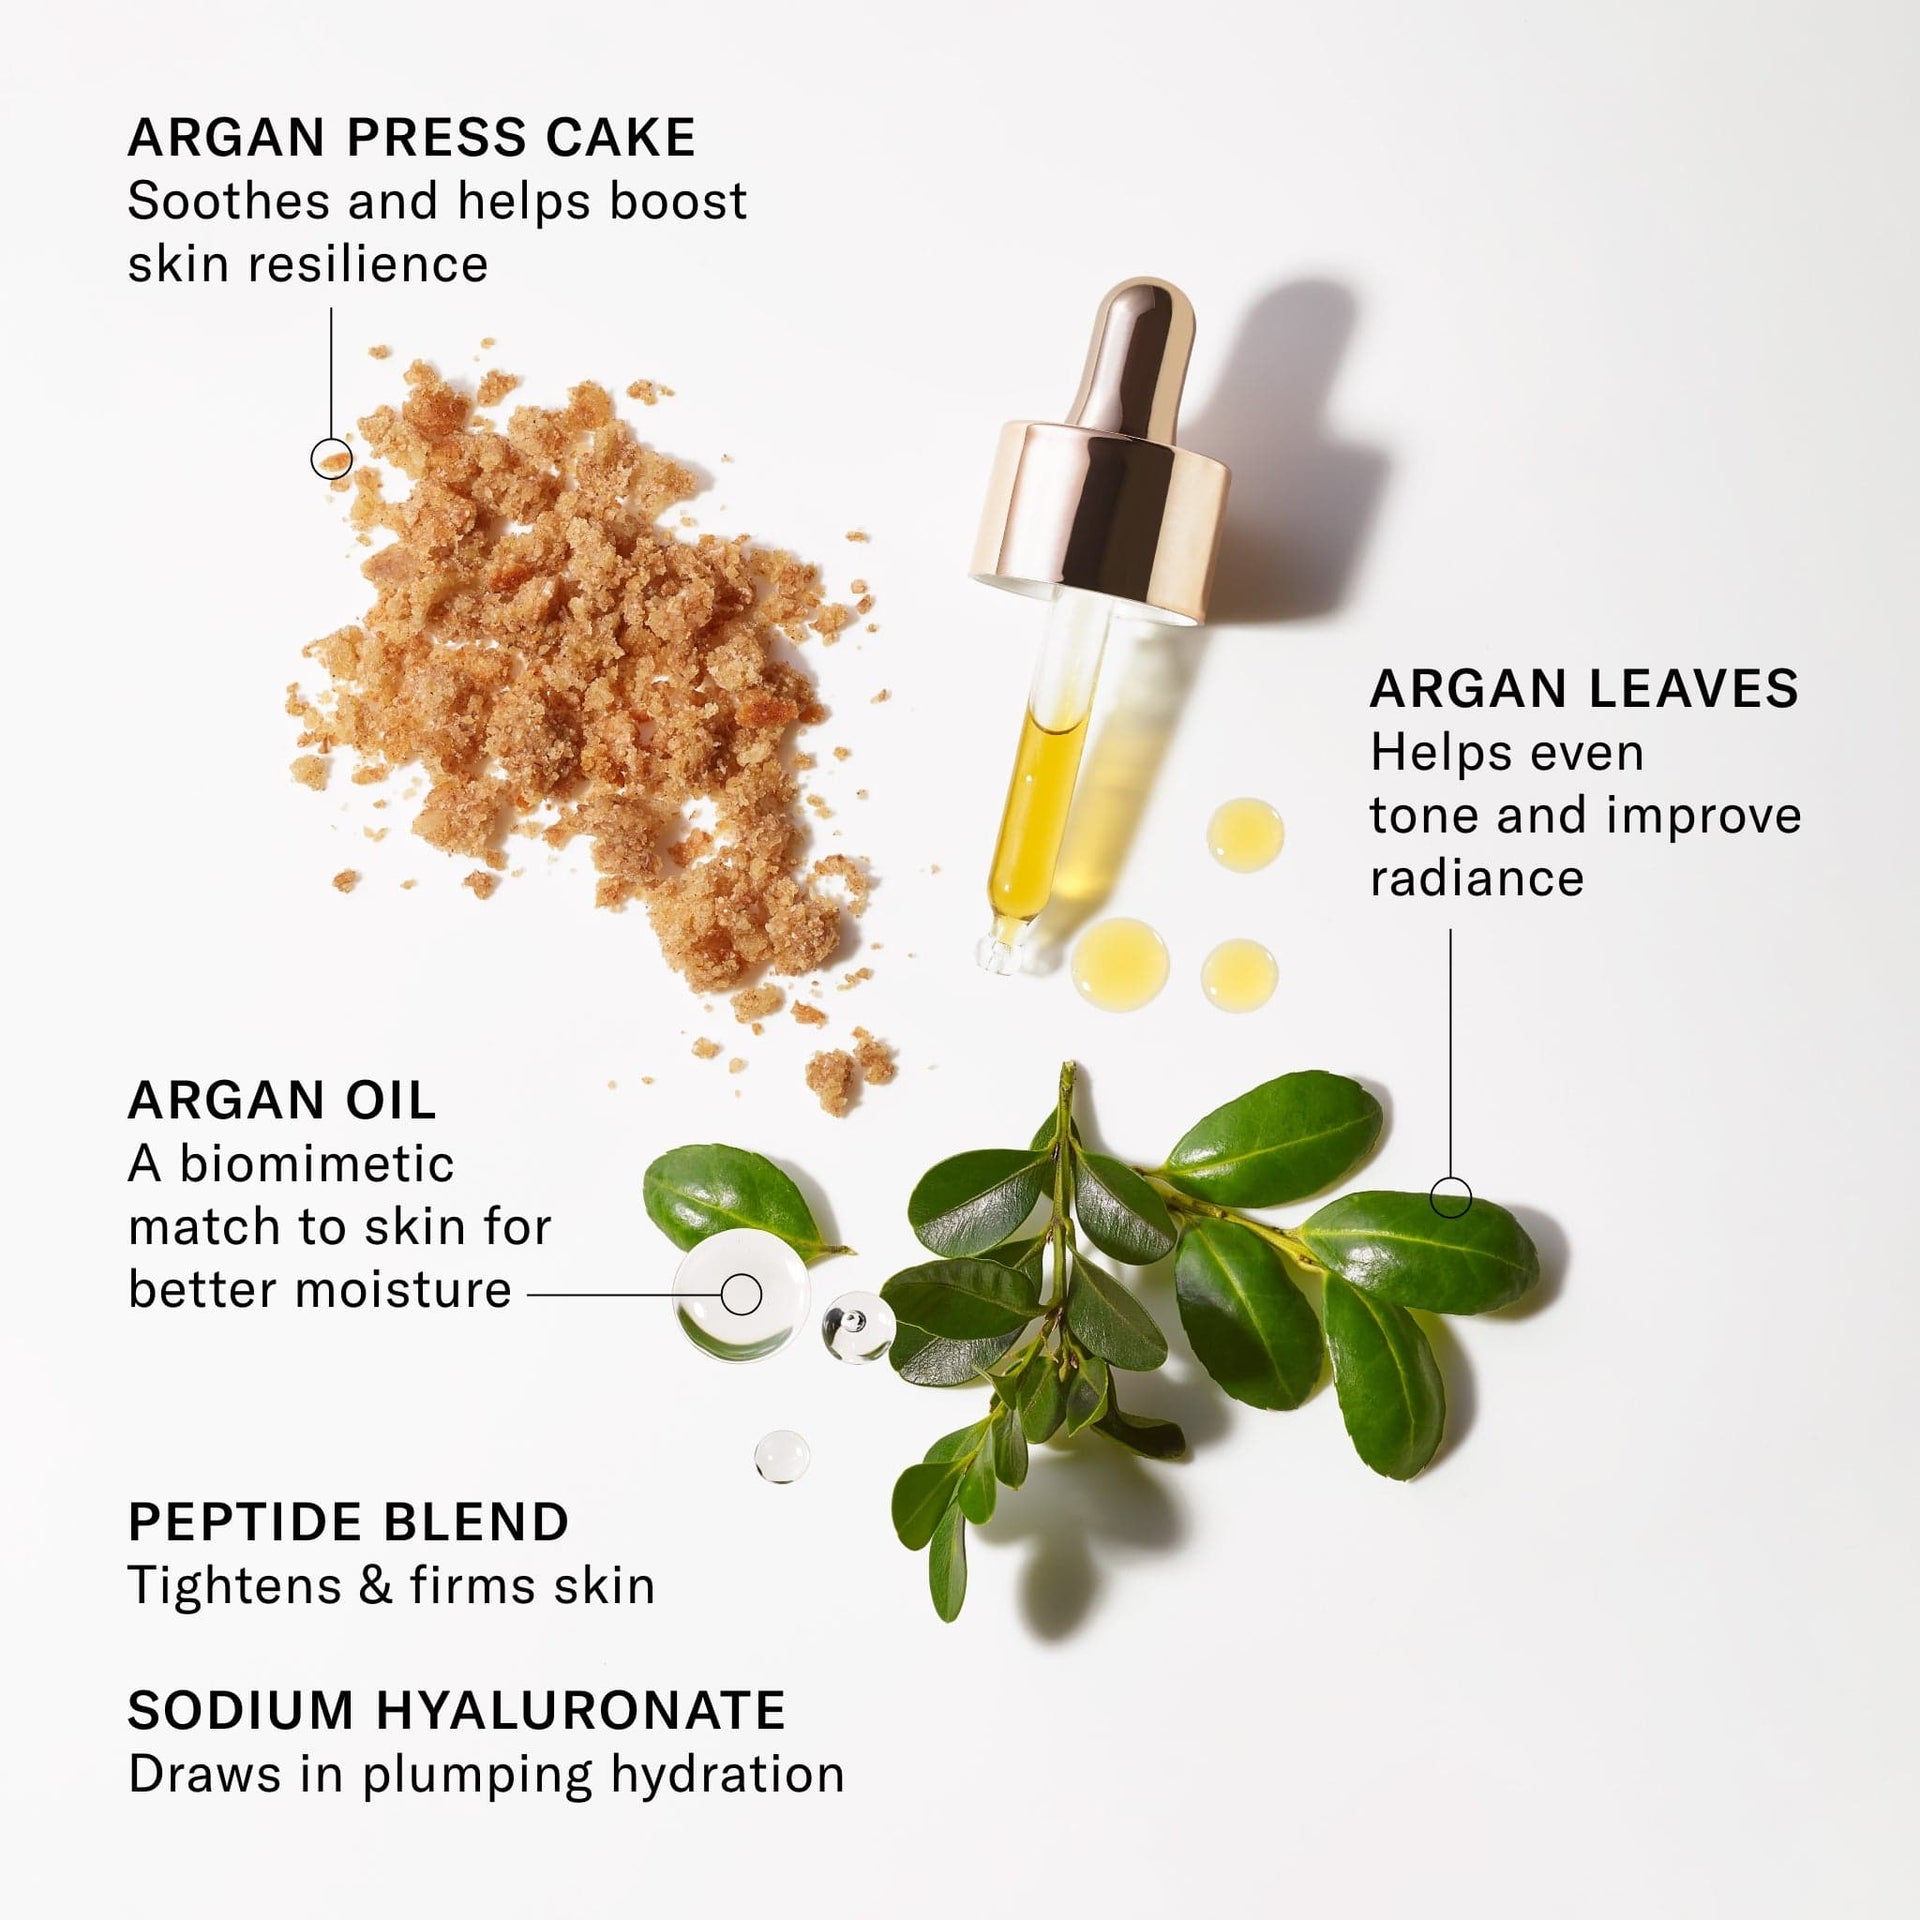 Ingredients. Argan Oil. Argan Press Cake. Argan leaves.